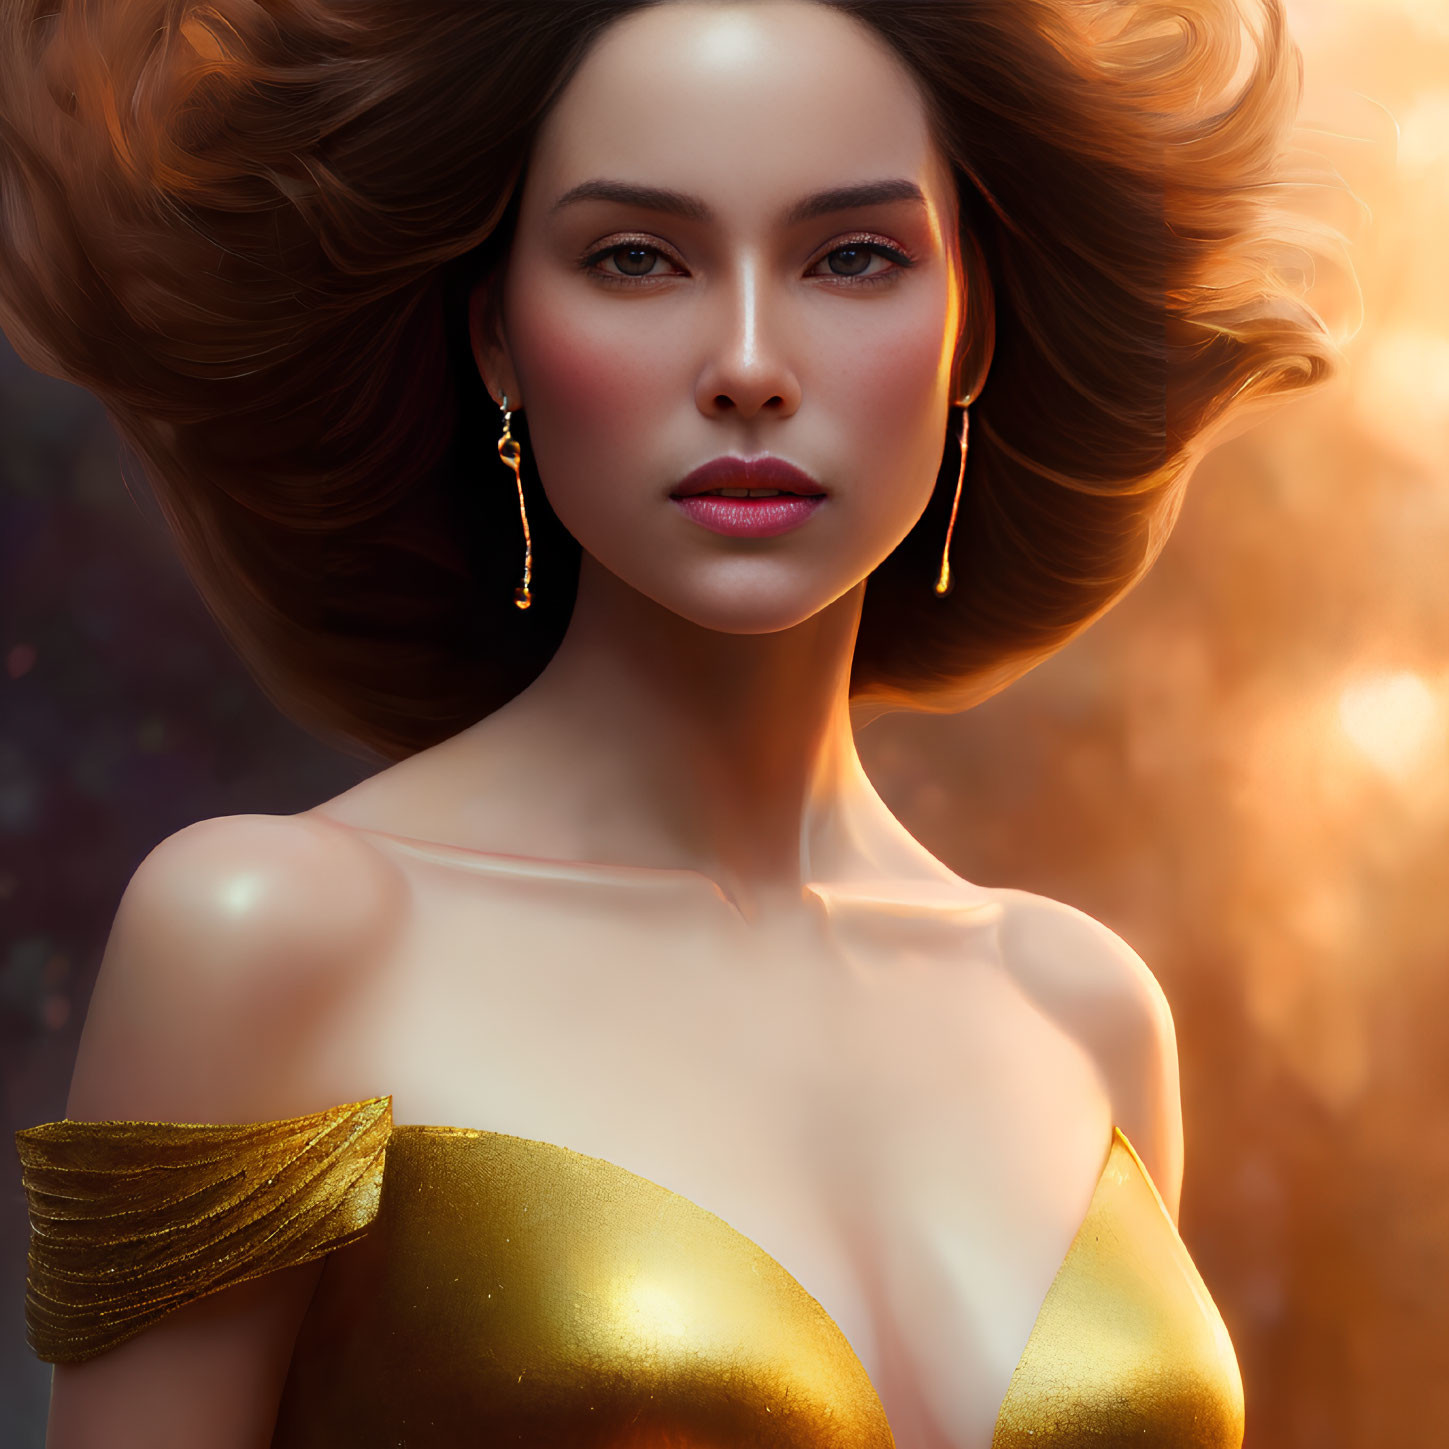 Digital portrait of woman with flowing hair, golden dress, subtle earrings